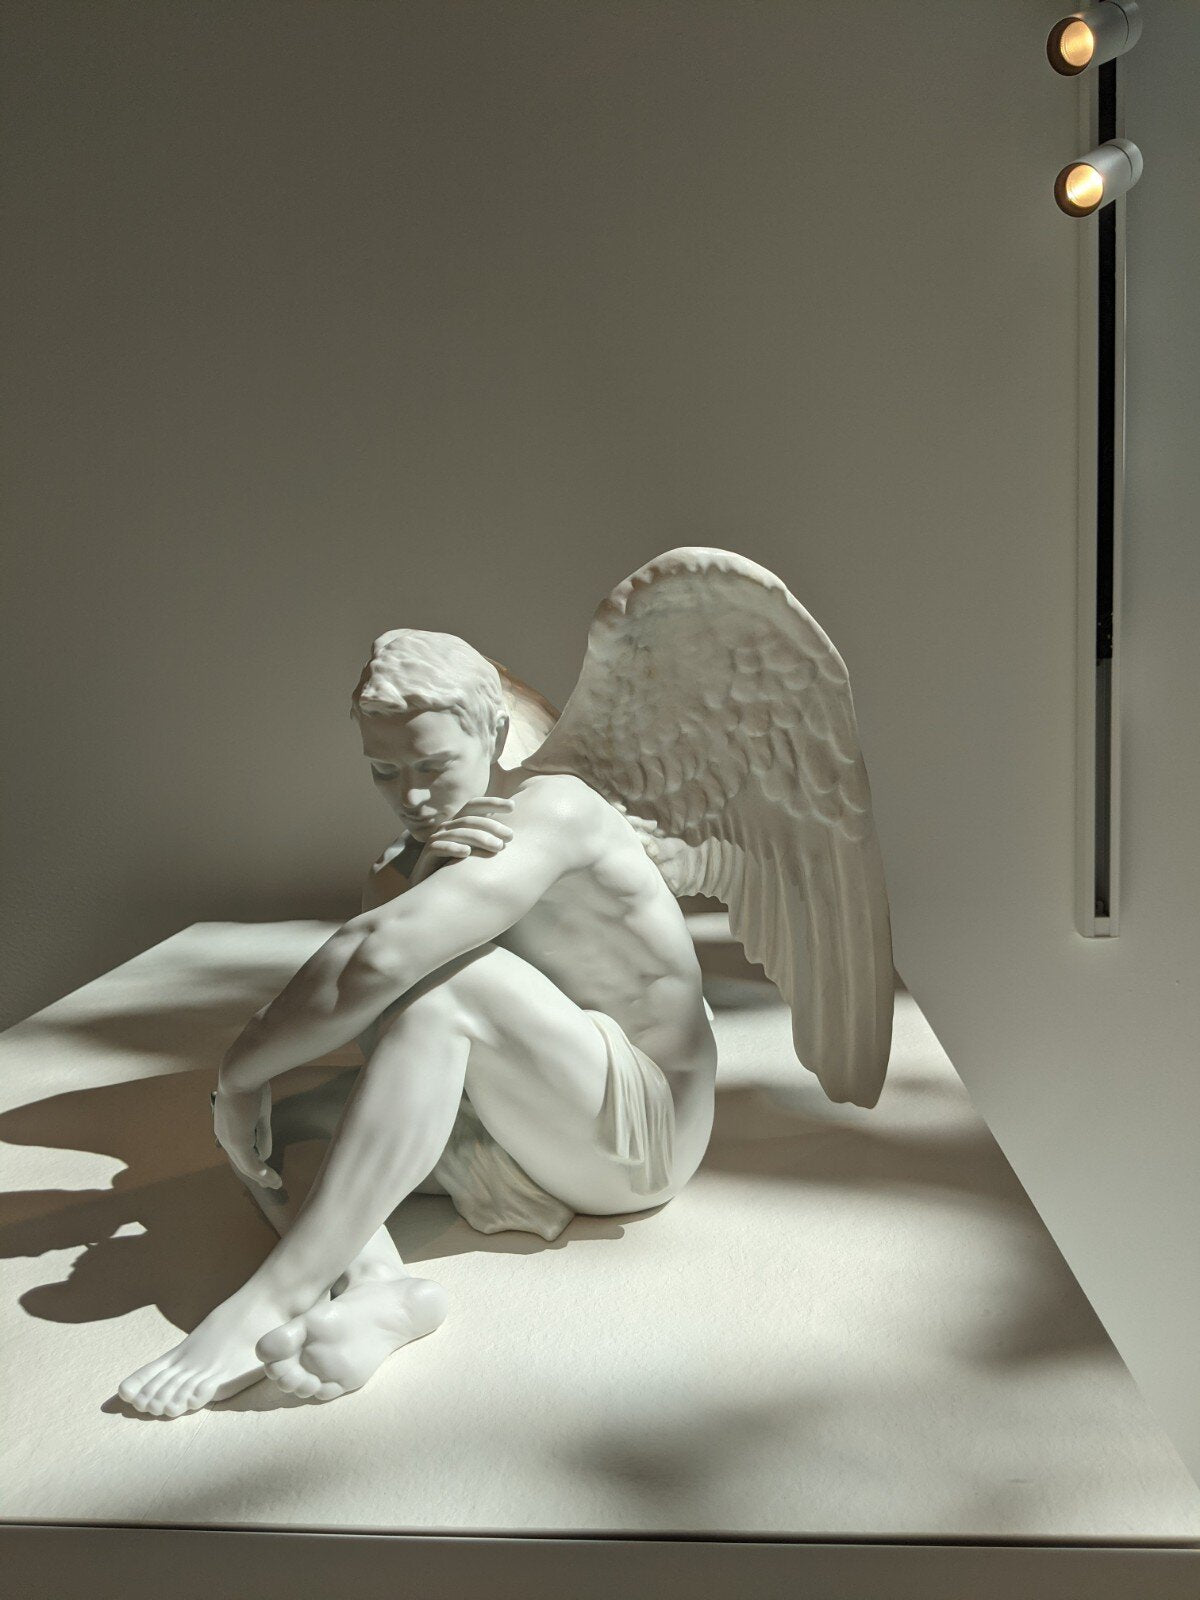 Protective Angel Figurine